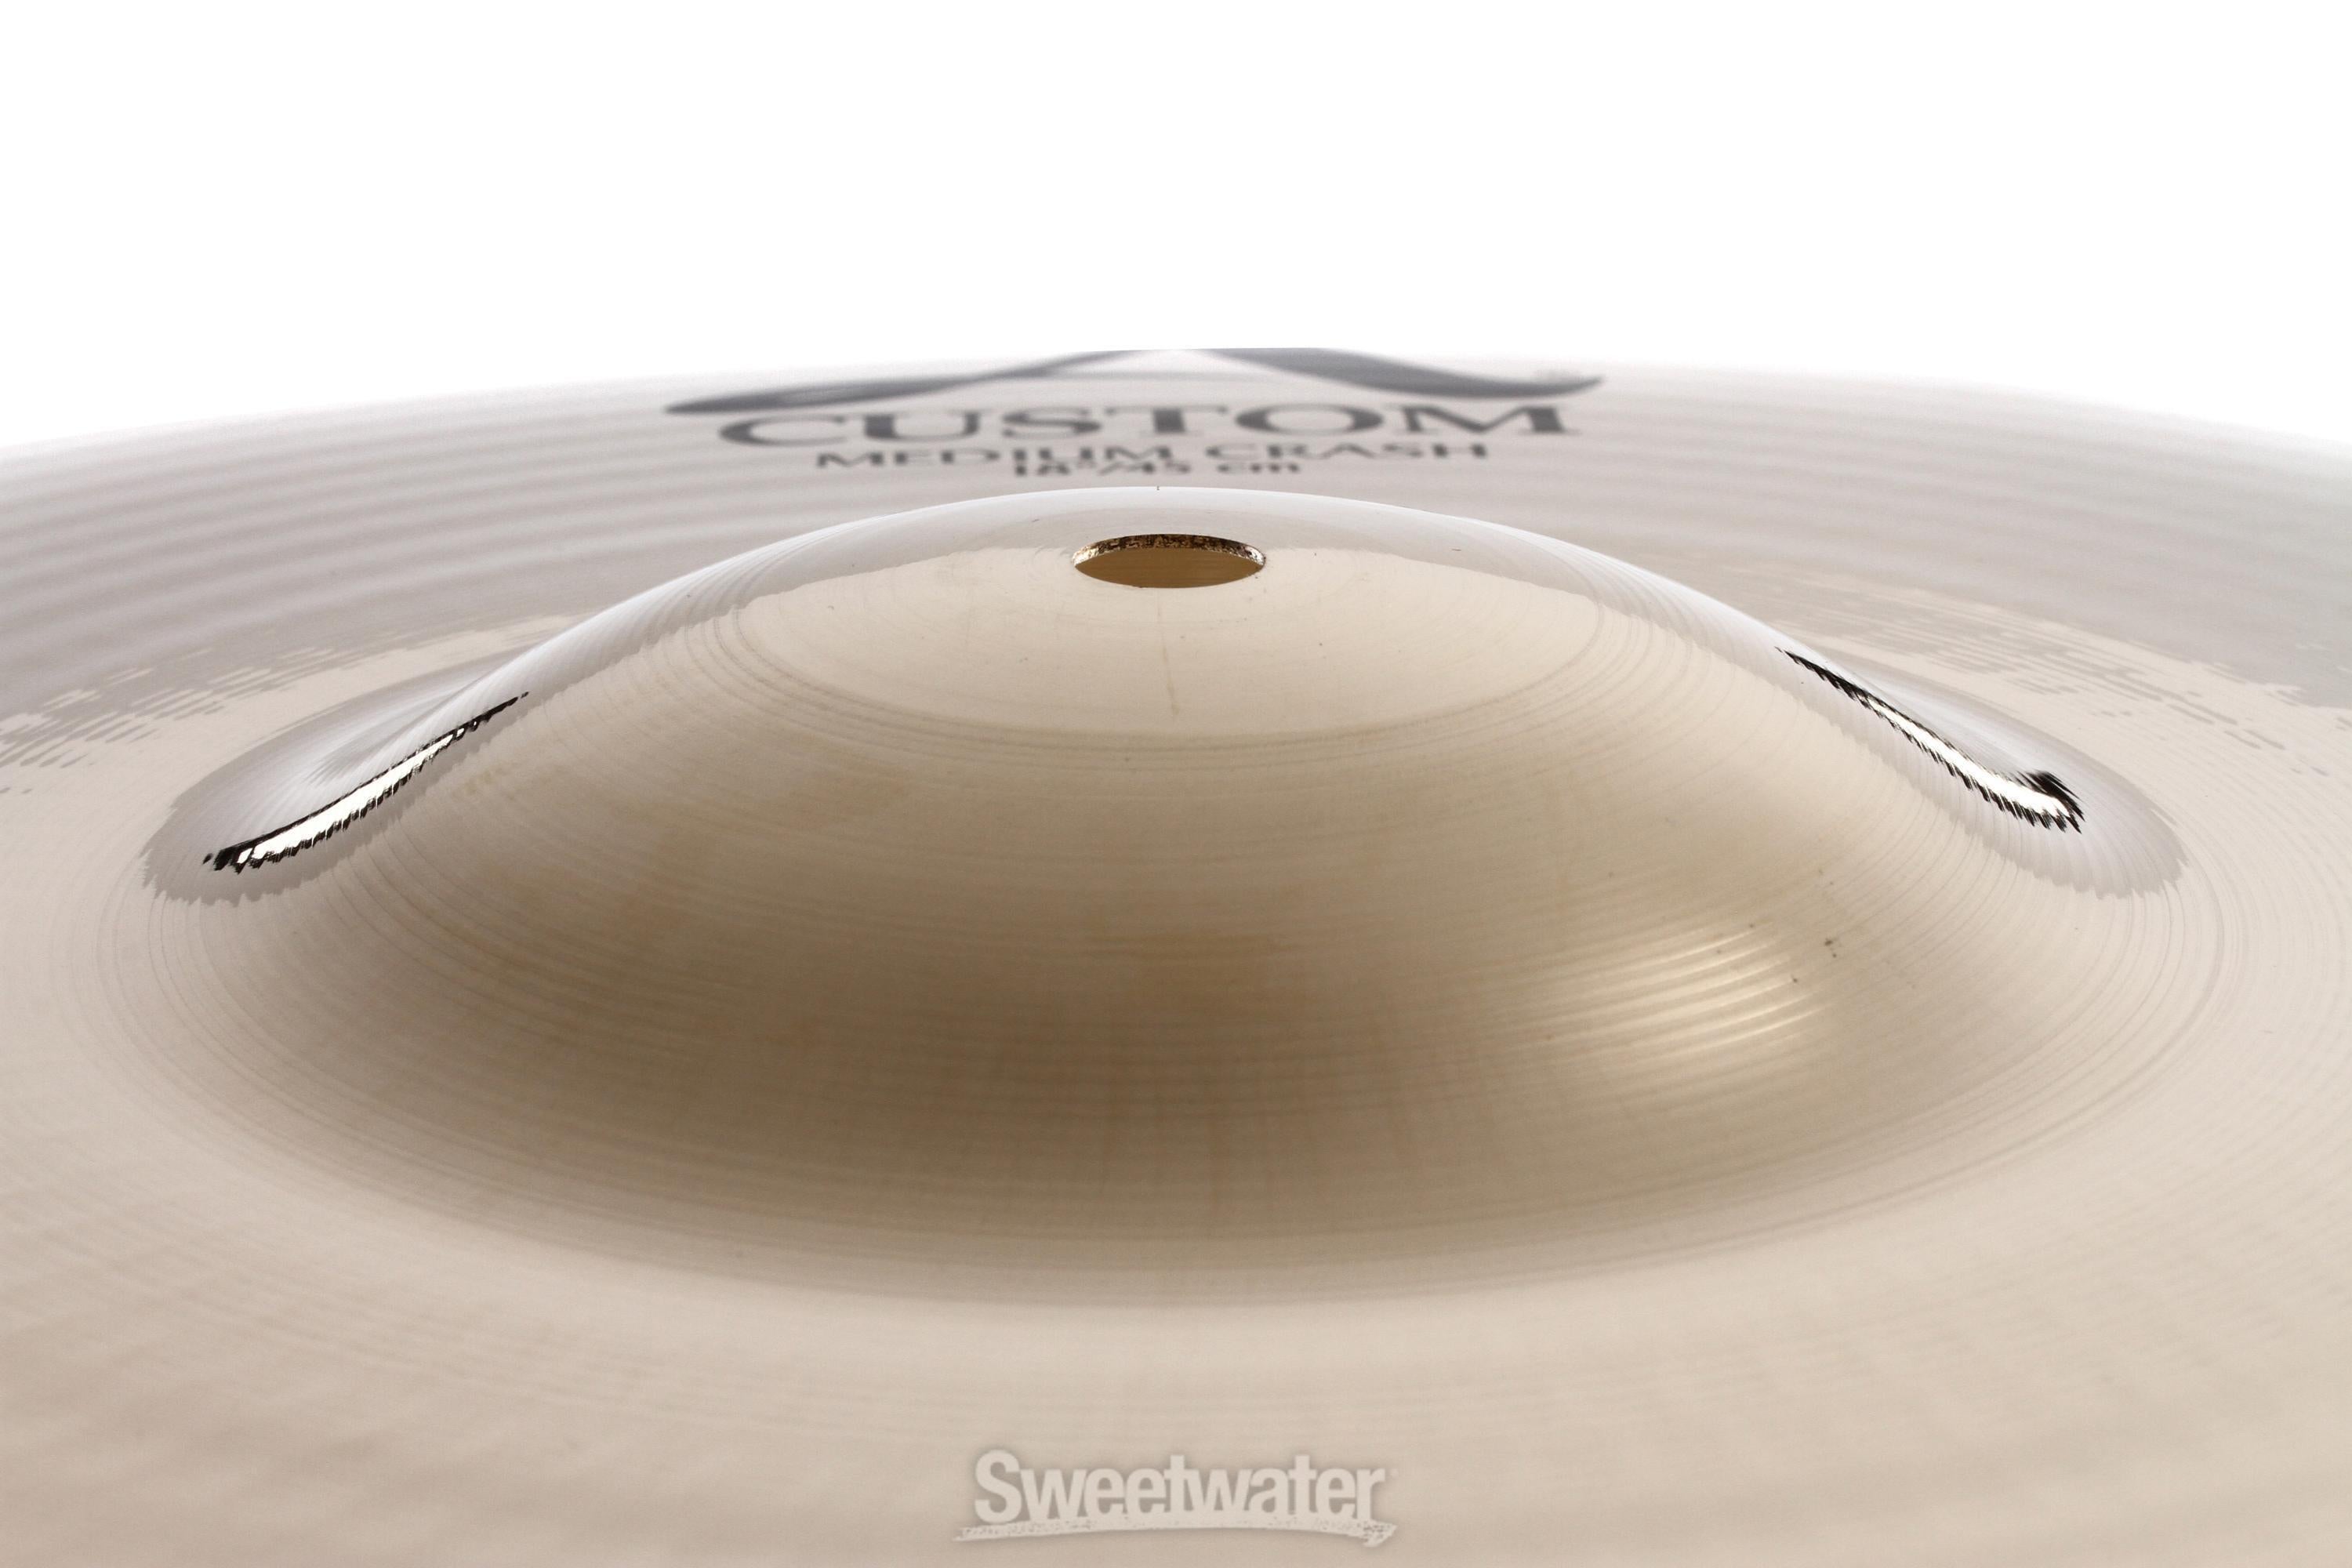 Zildjian 18 inch A Custom Medium Crash Cymbal | Sweetwater